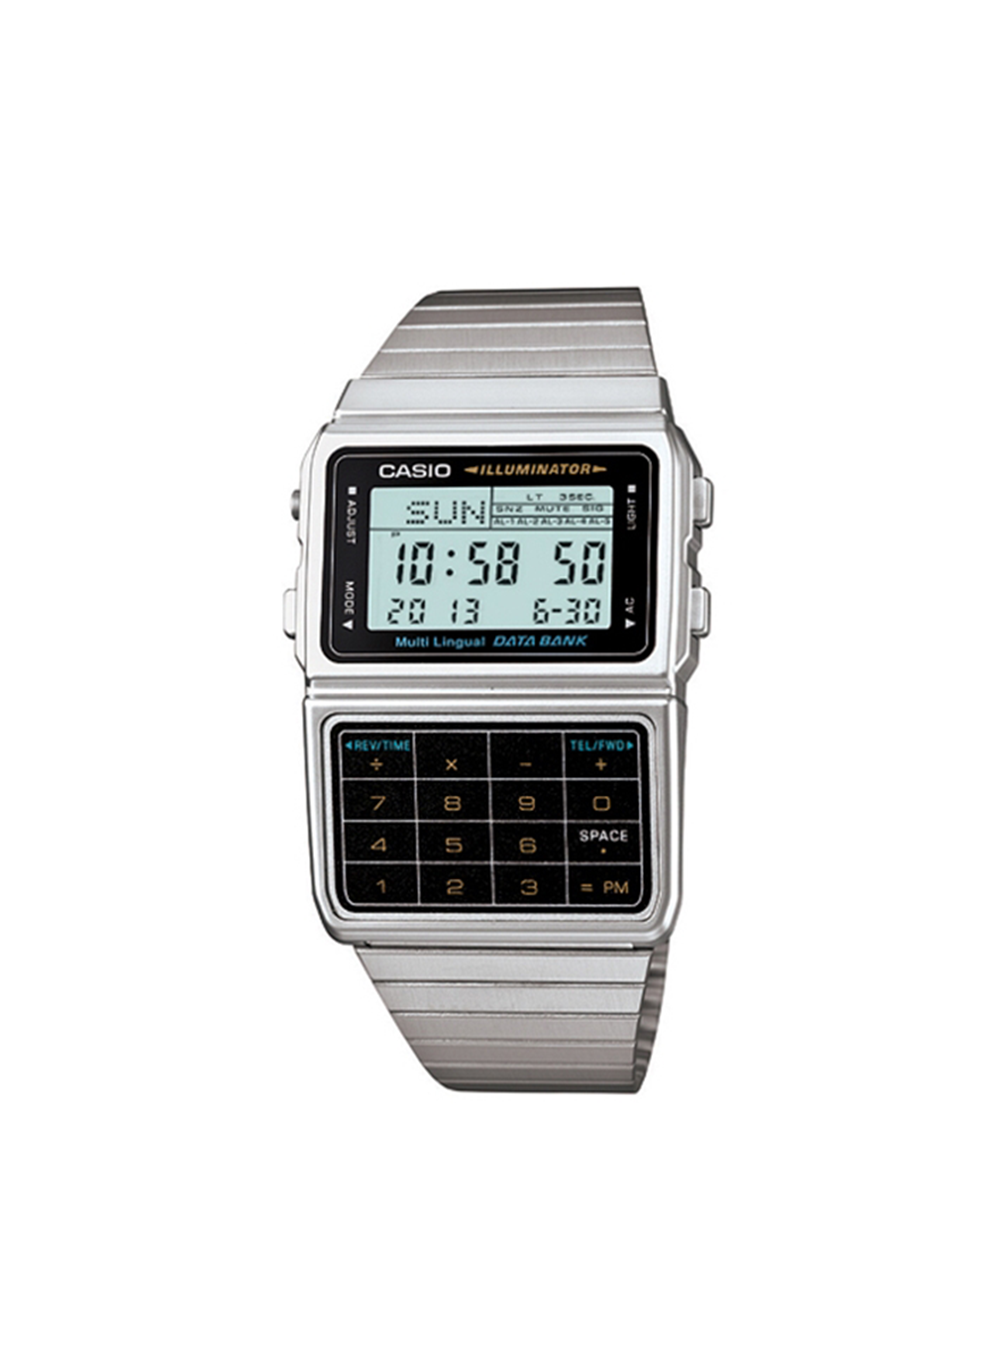 Metal calculator wristwatch